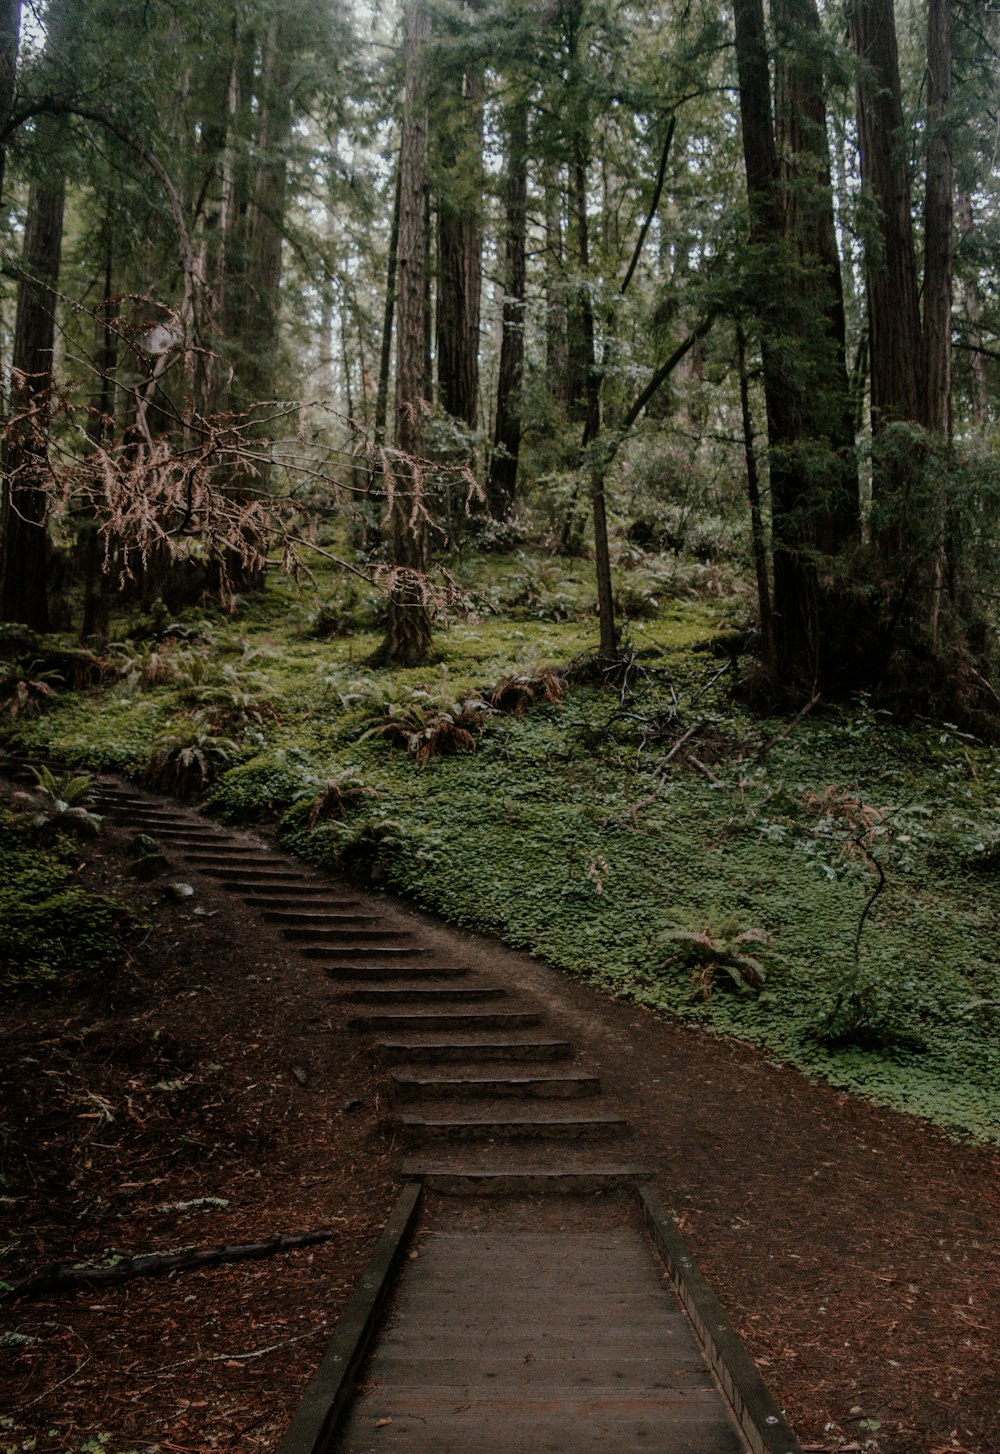 a wooden path through a forest